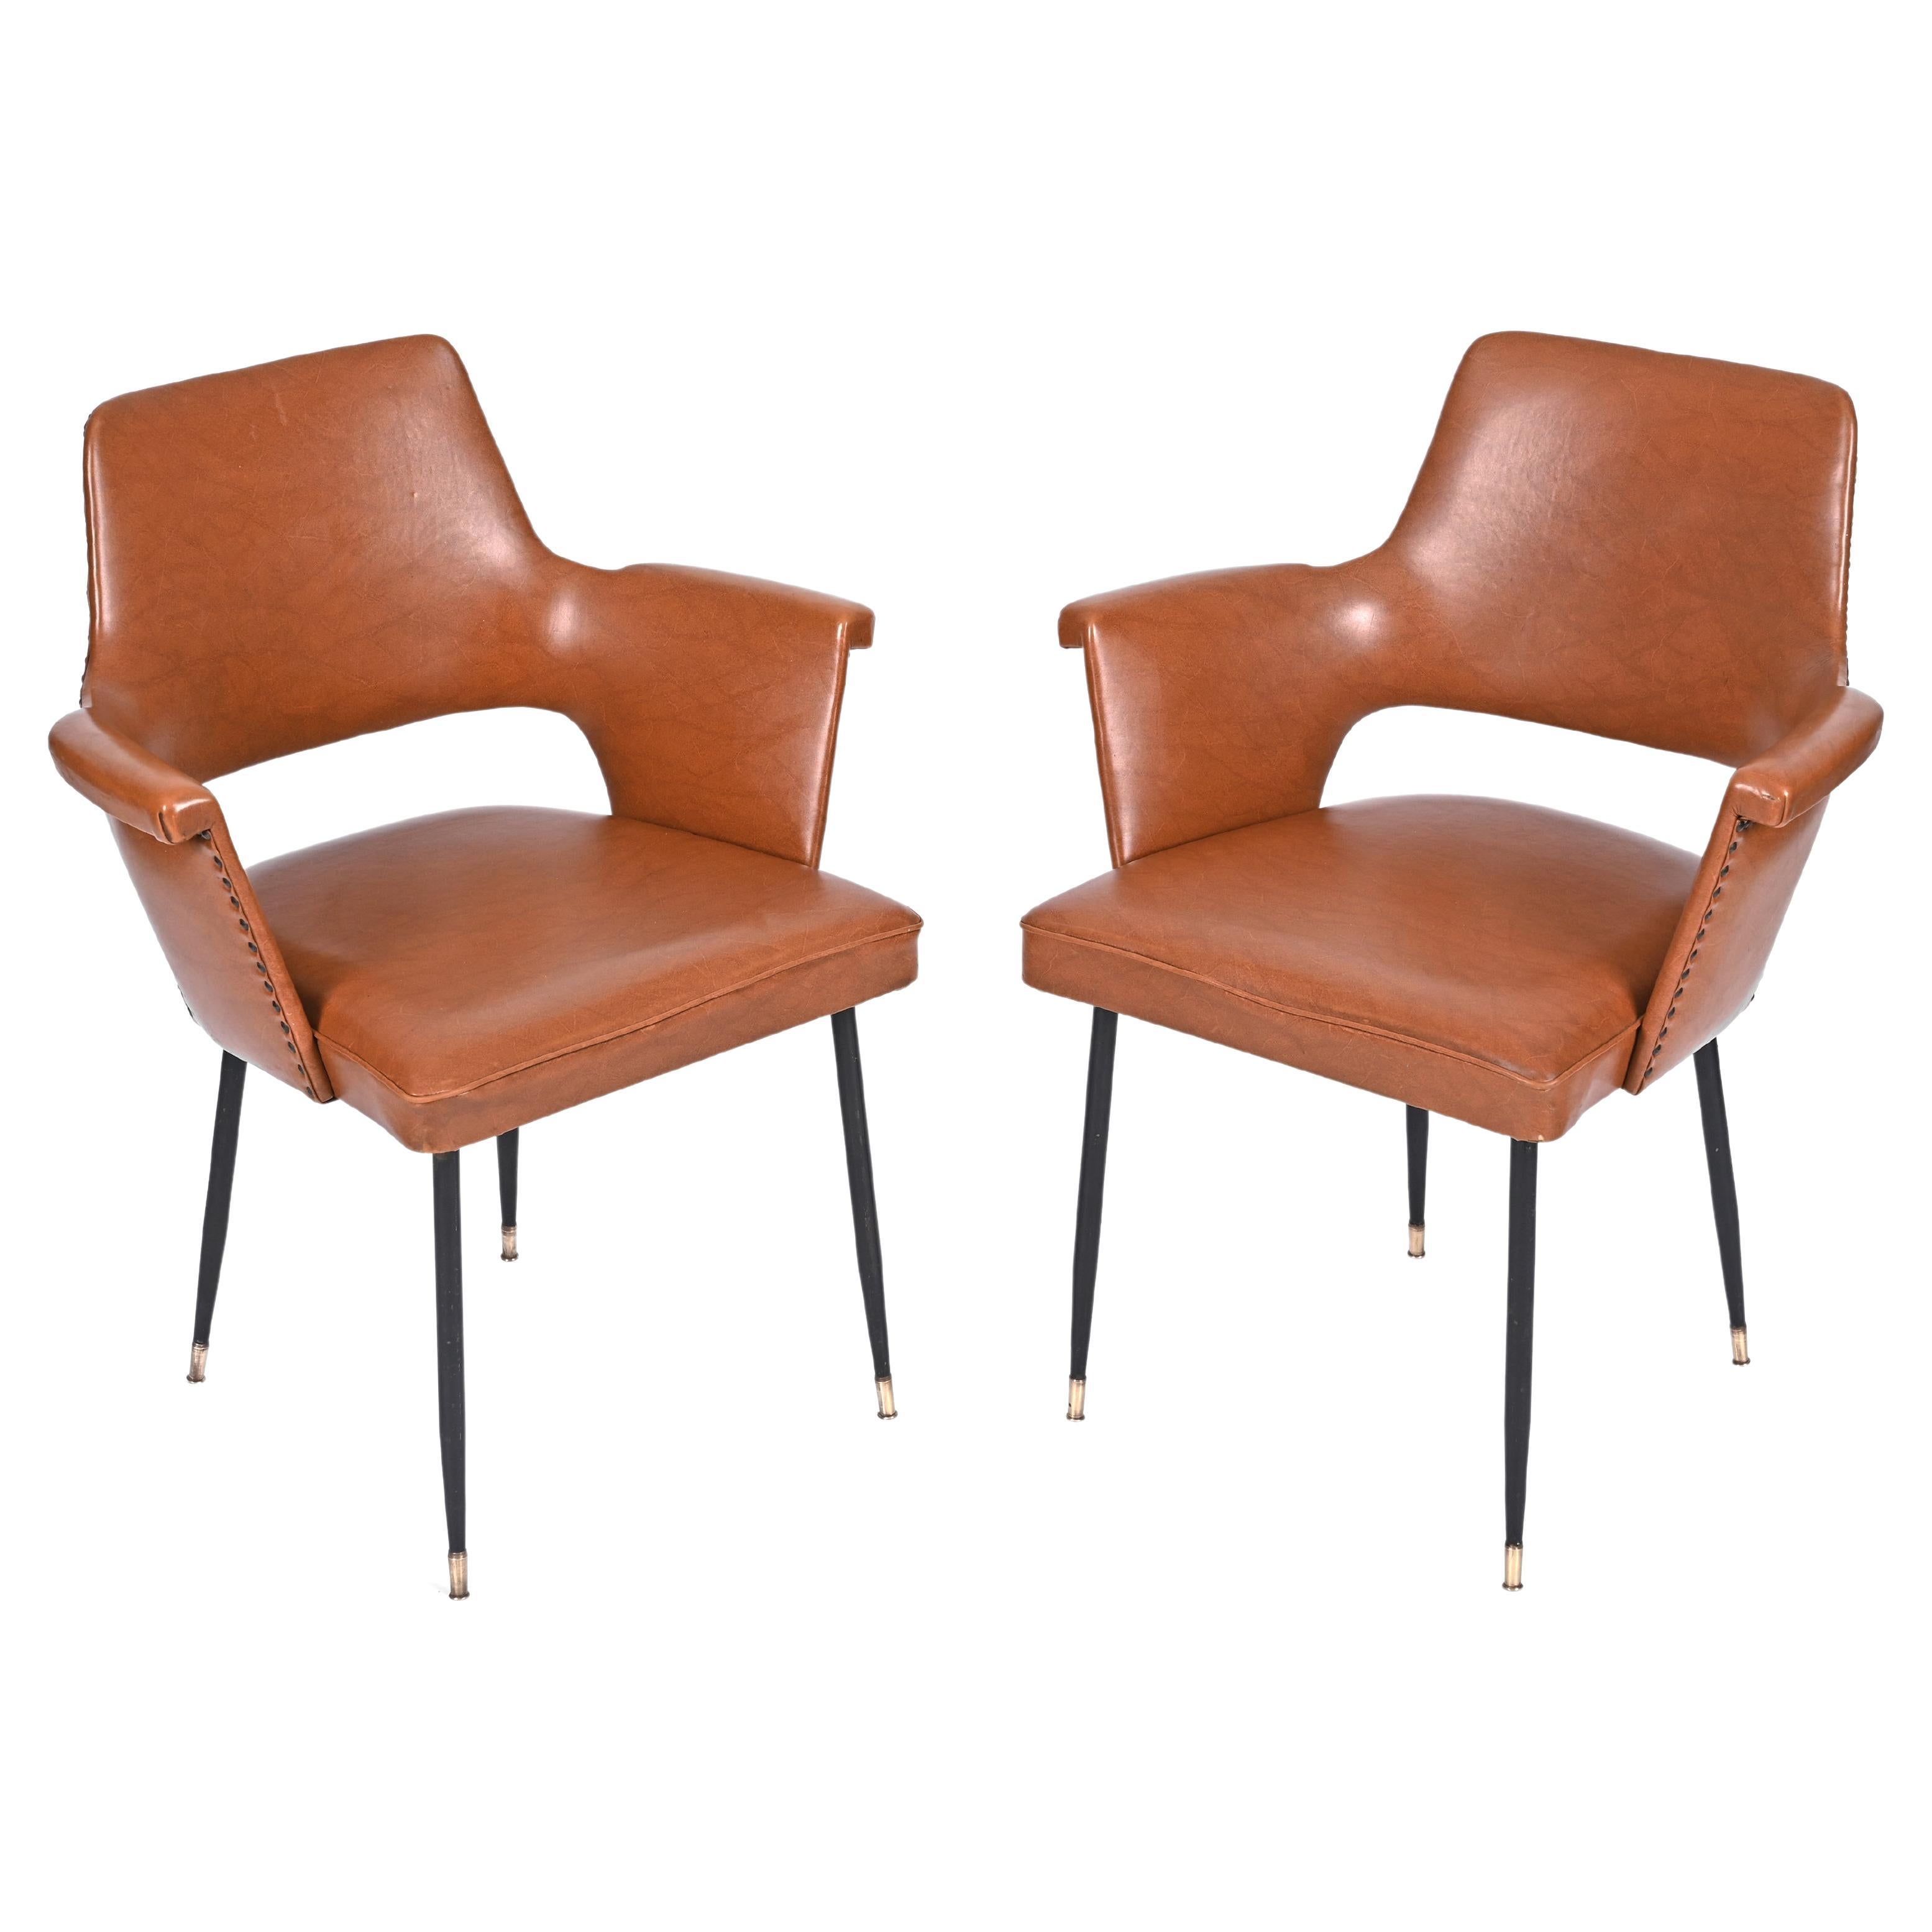 Paar Sessel aus braunem Kunstleder, Messing und Metall, Andre Motte, Italien 1950er Jahre